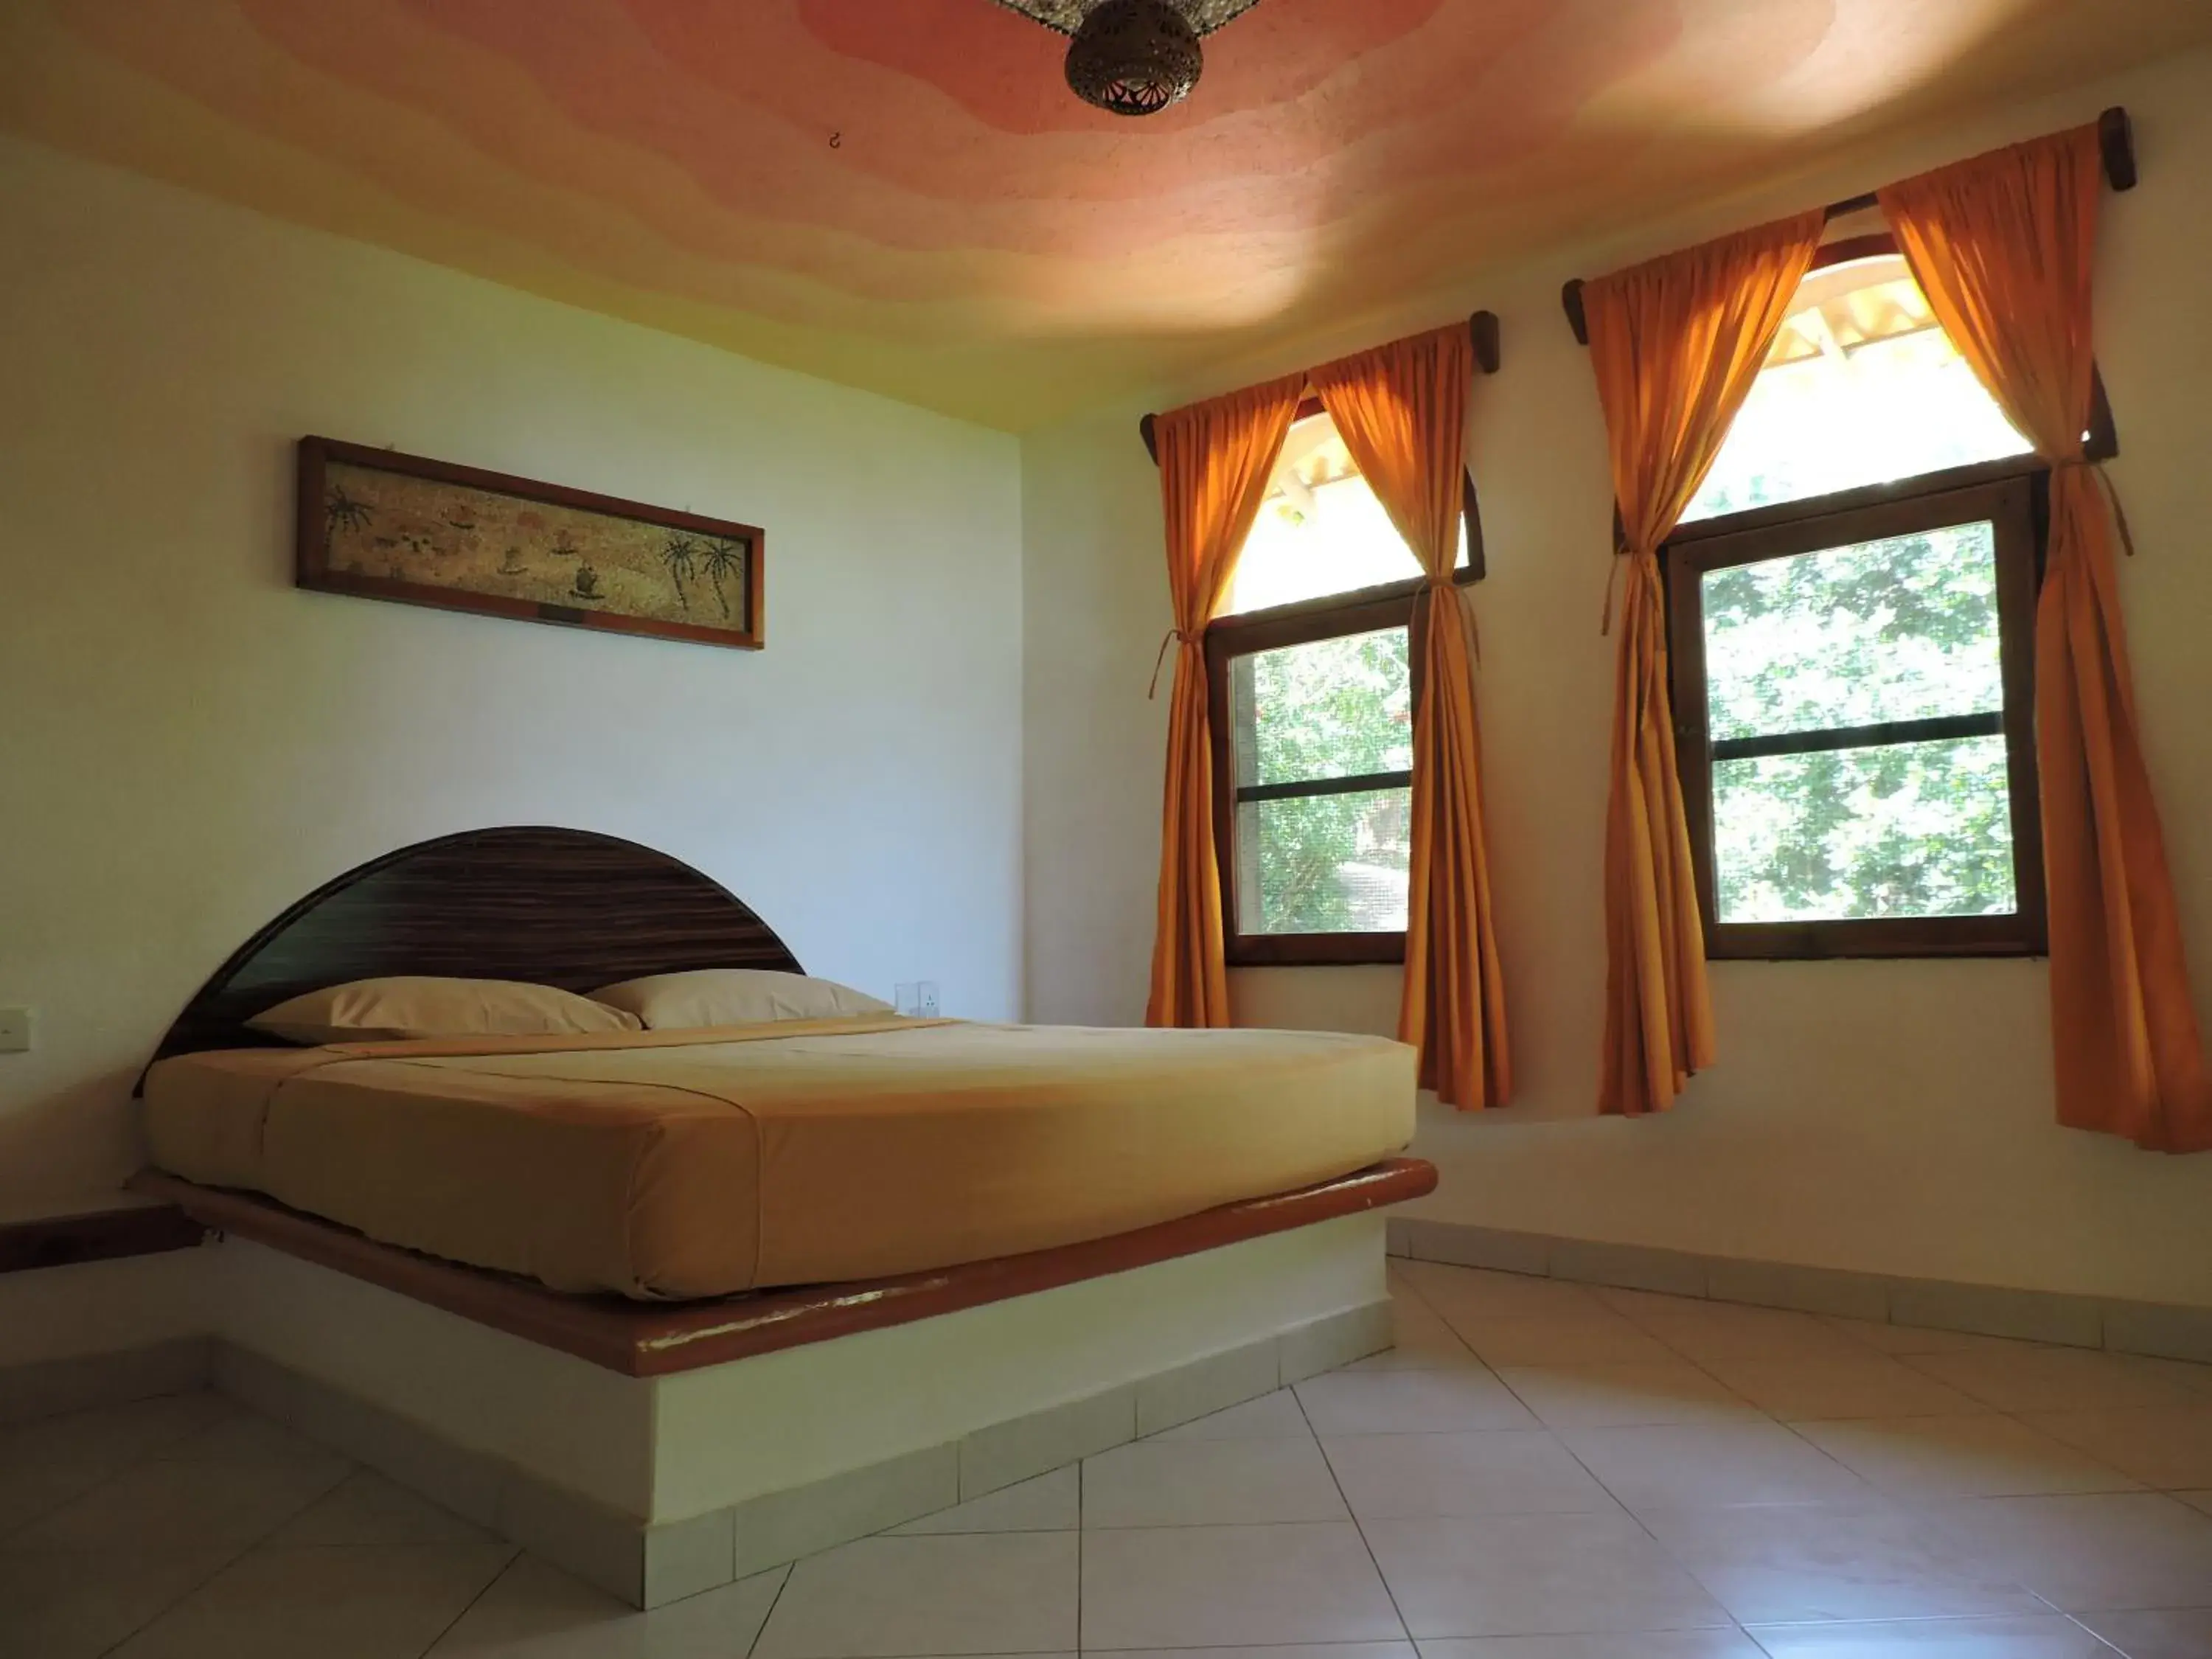 Bed, Room Photo in Eva Lanka Hotel - Beach & Wellness